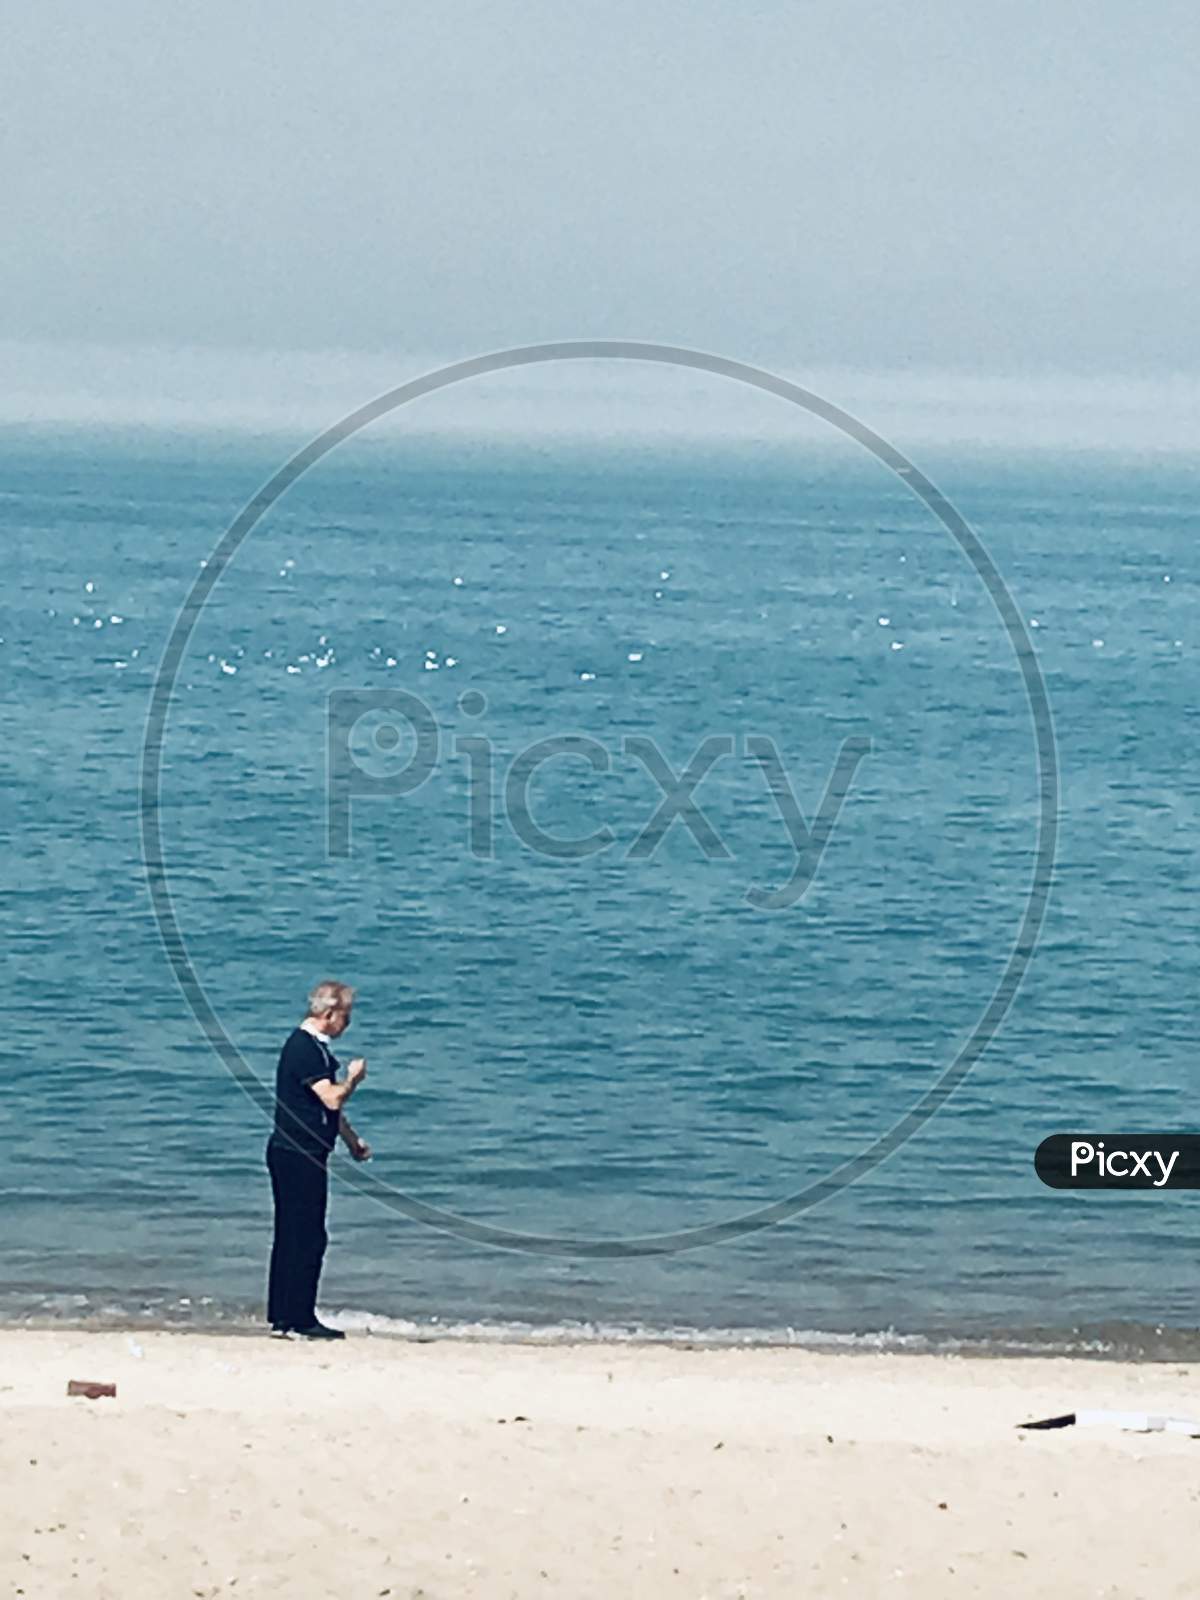 Image of A man fishing on the (Shraq) beach kuwait-SG158191-Picxy